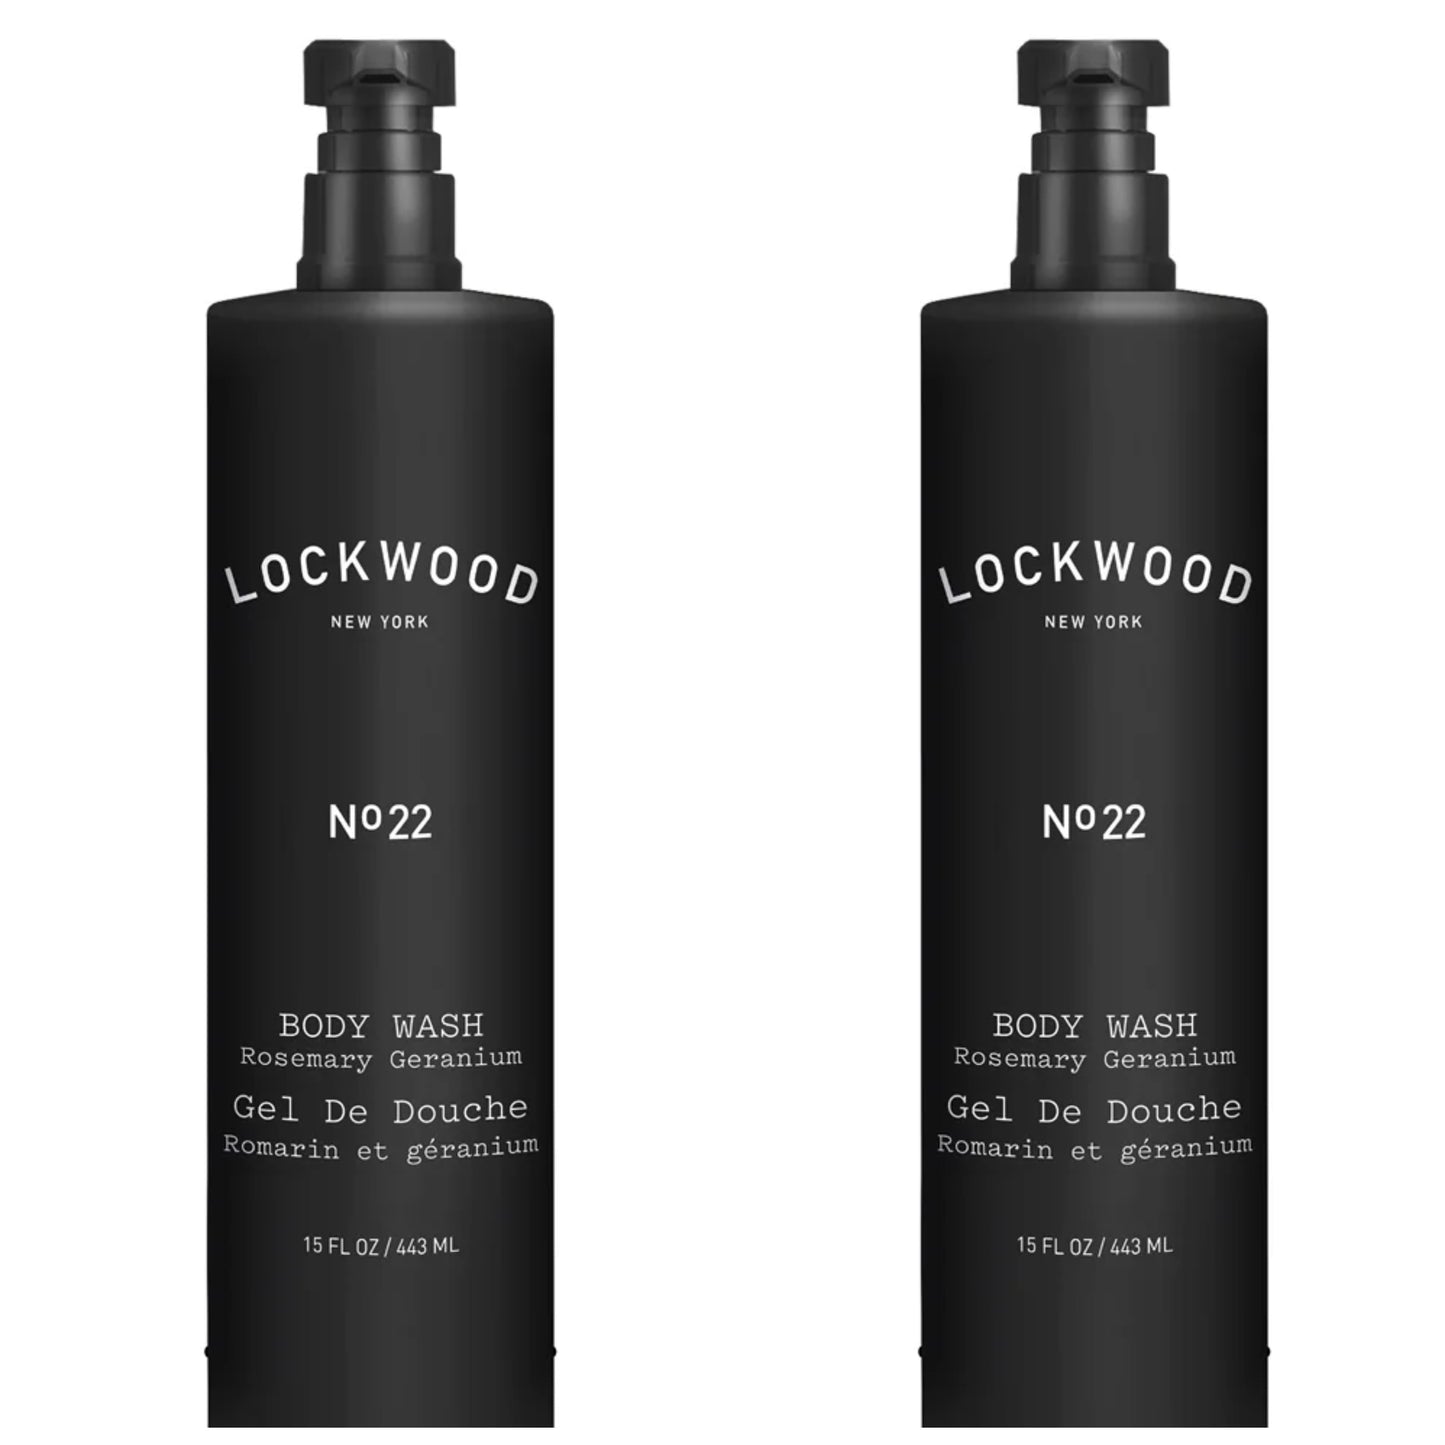 Lockwood New York shower gel 15oz Set of 2